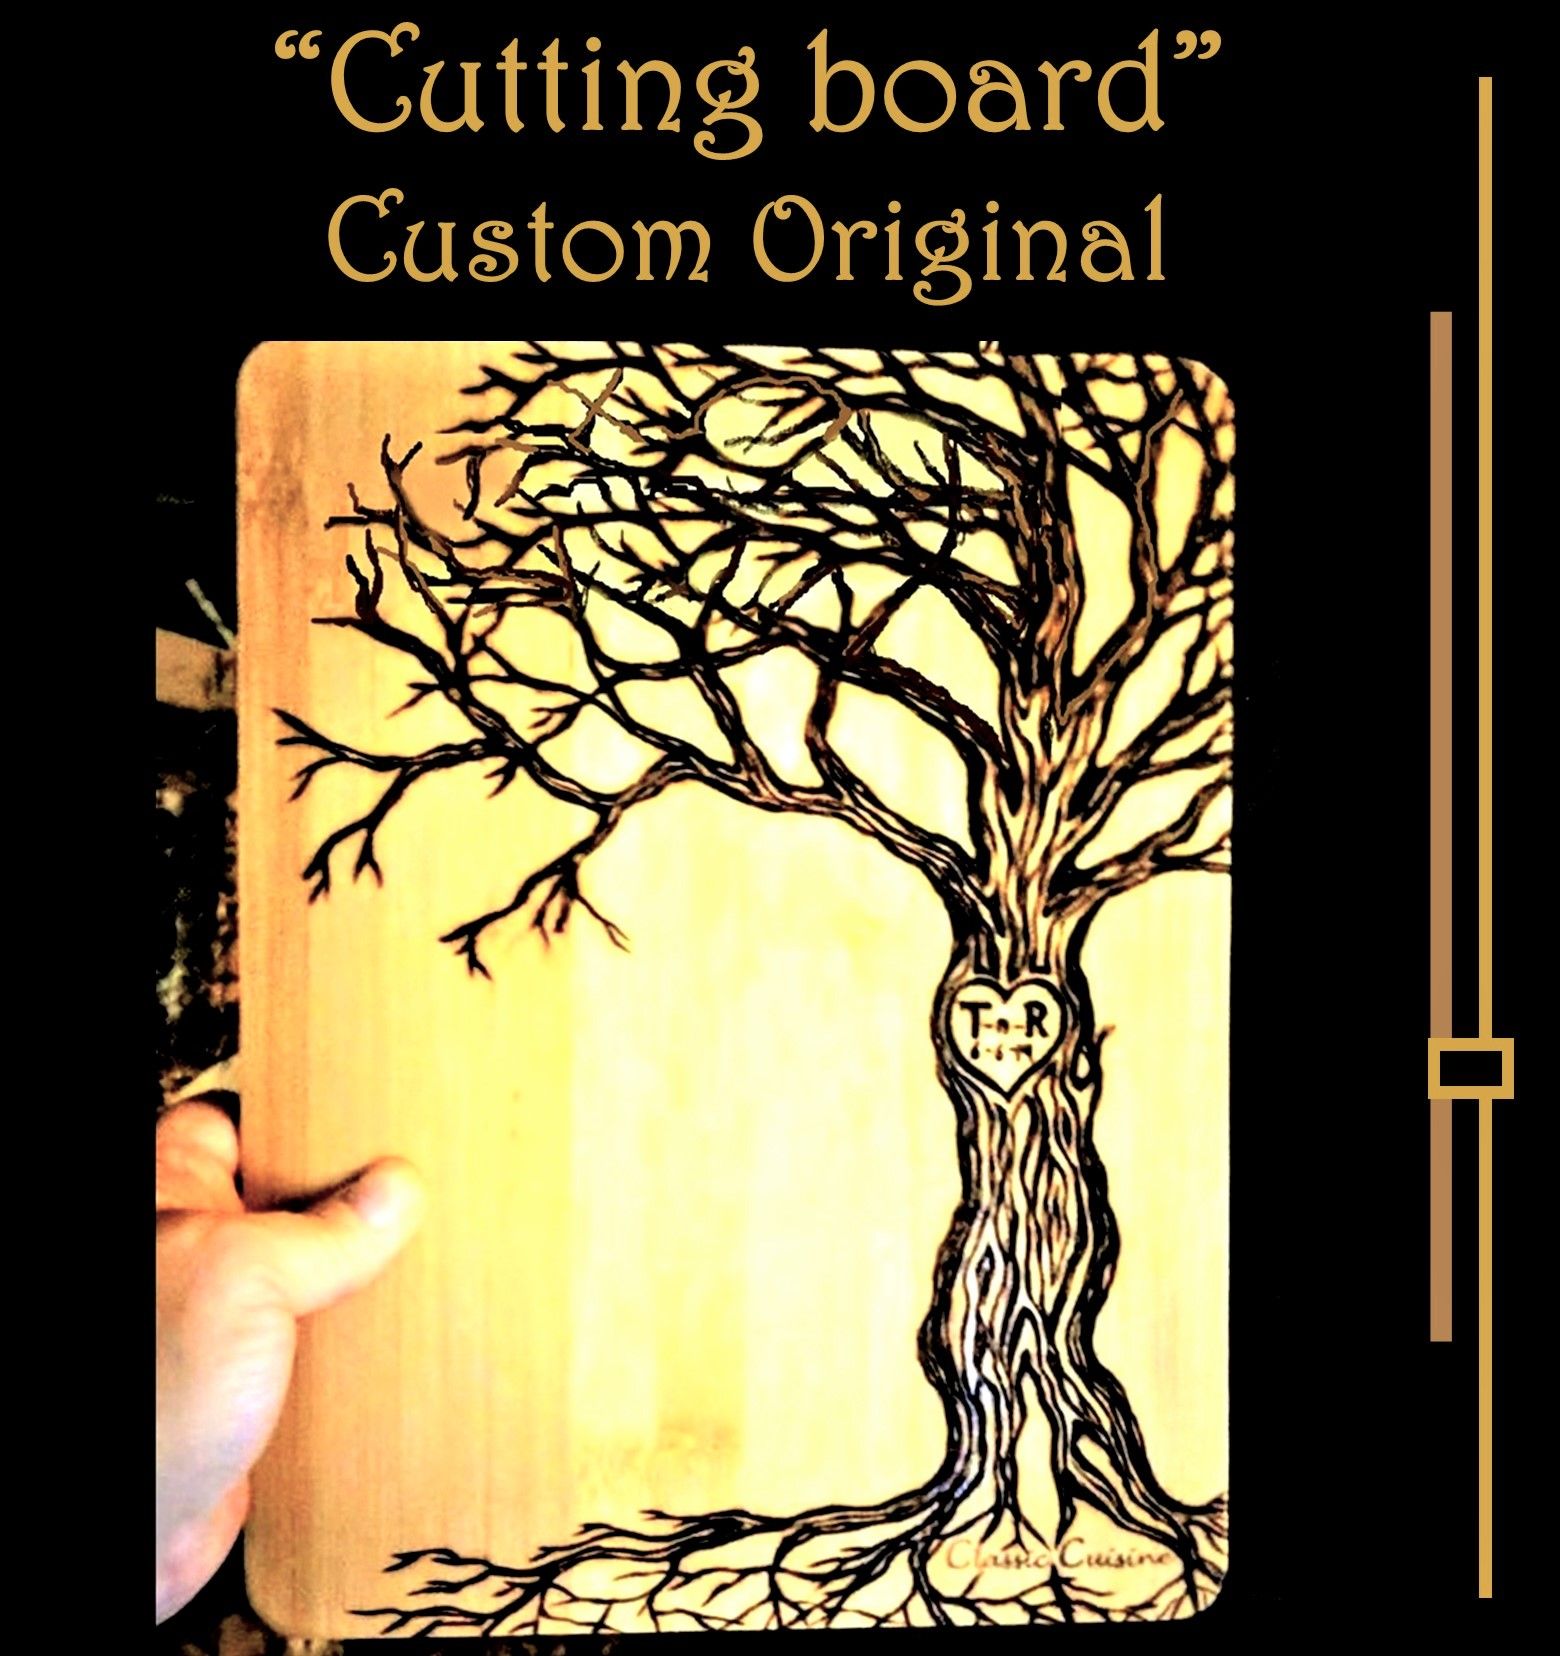 https://images.custommade.com/aVnbtamkXgaezJdqu0GflAAzs_Q=/custommade-photosets/ae74fb1a69bdd6d_custom_cutting_board.jpg